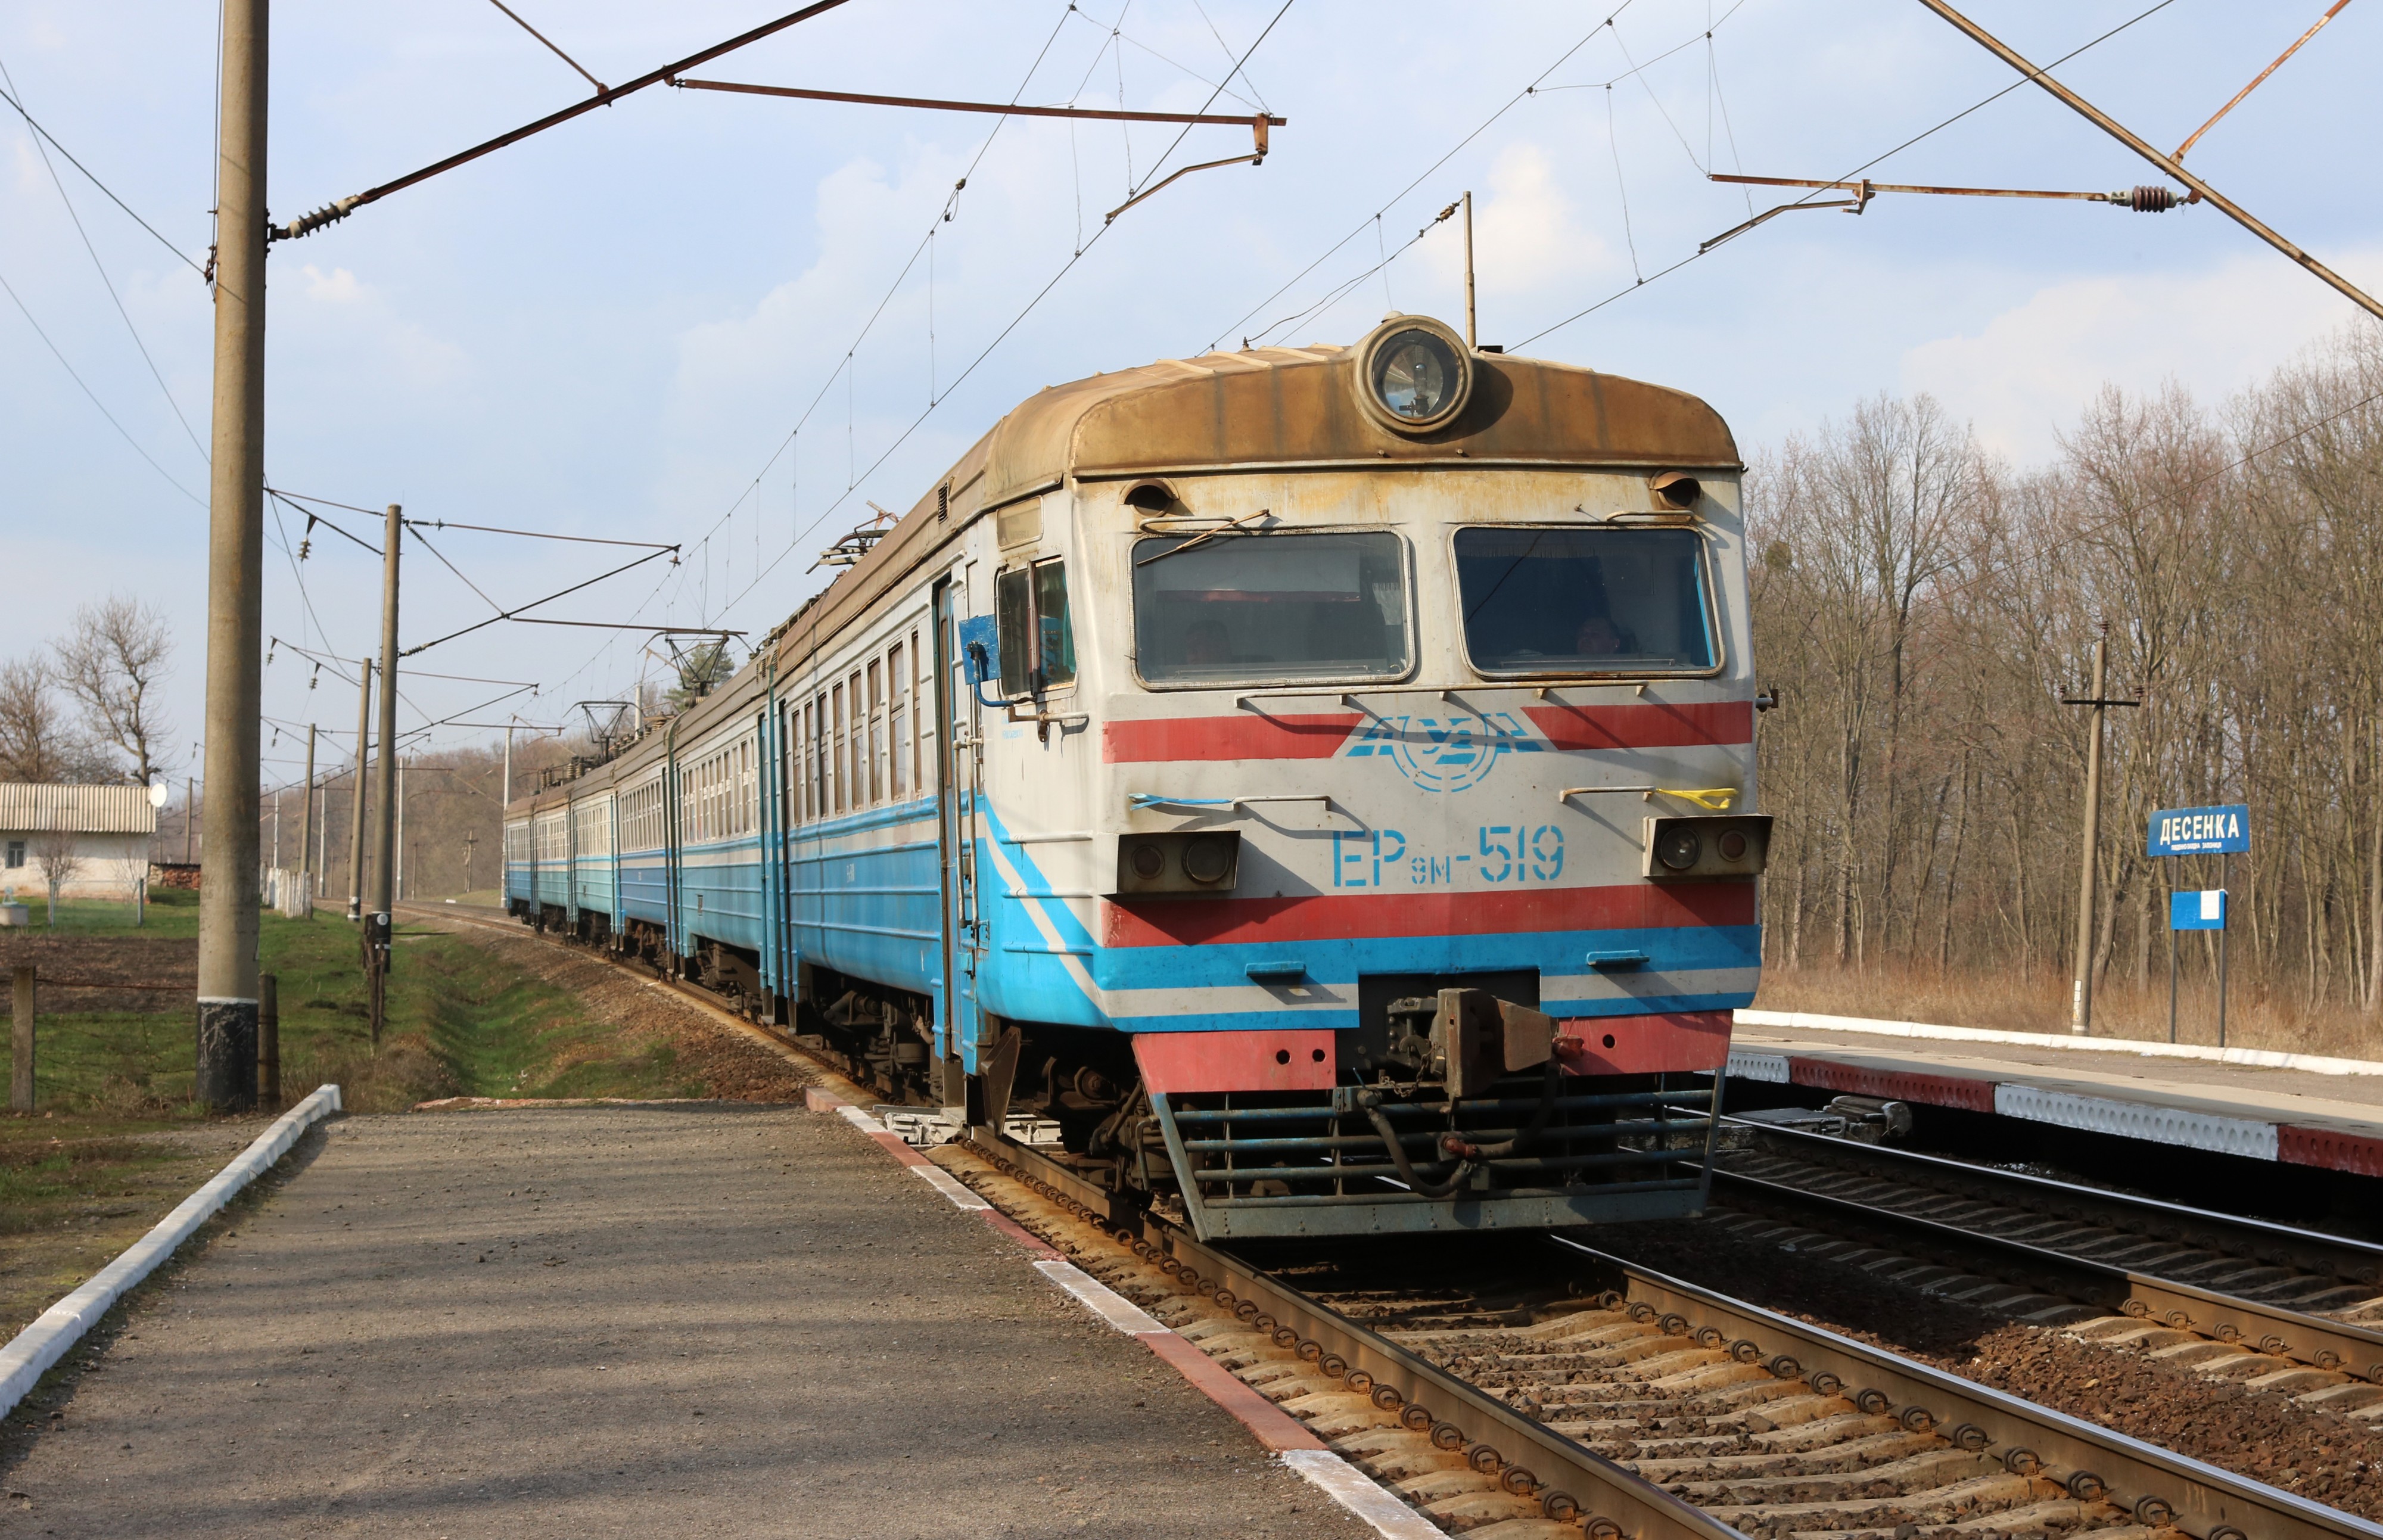 ER9M-519 train 2017 G1